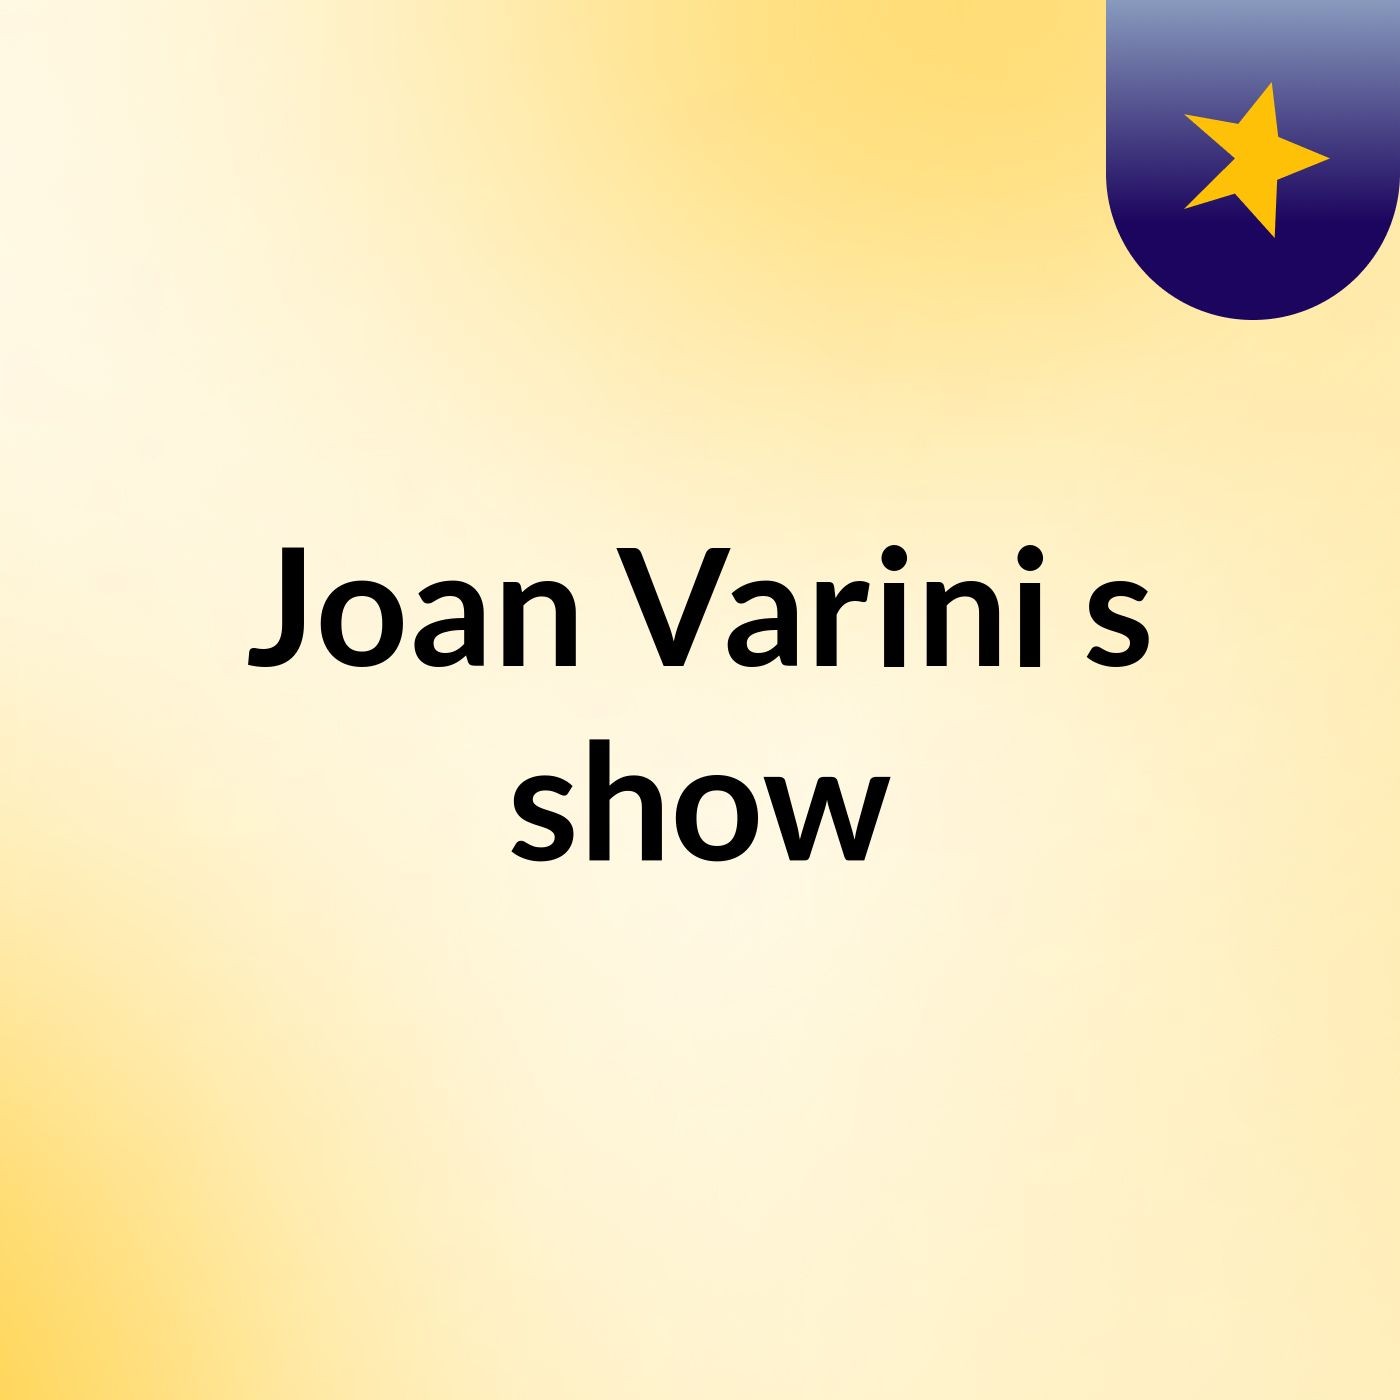 Joan Varini's show